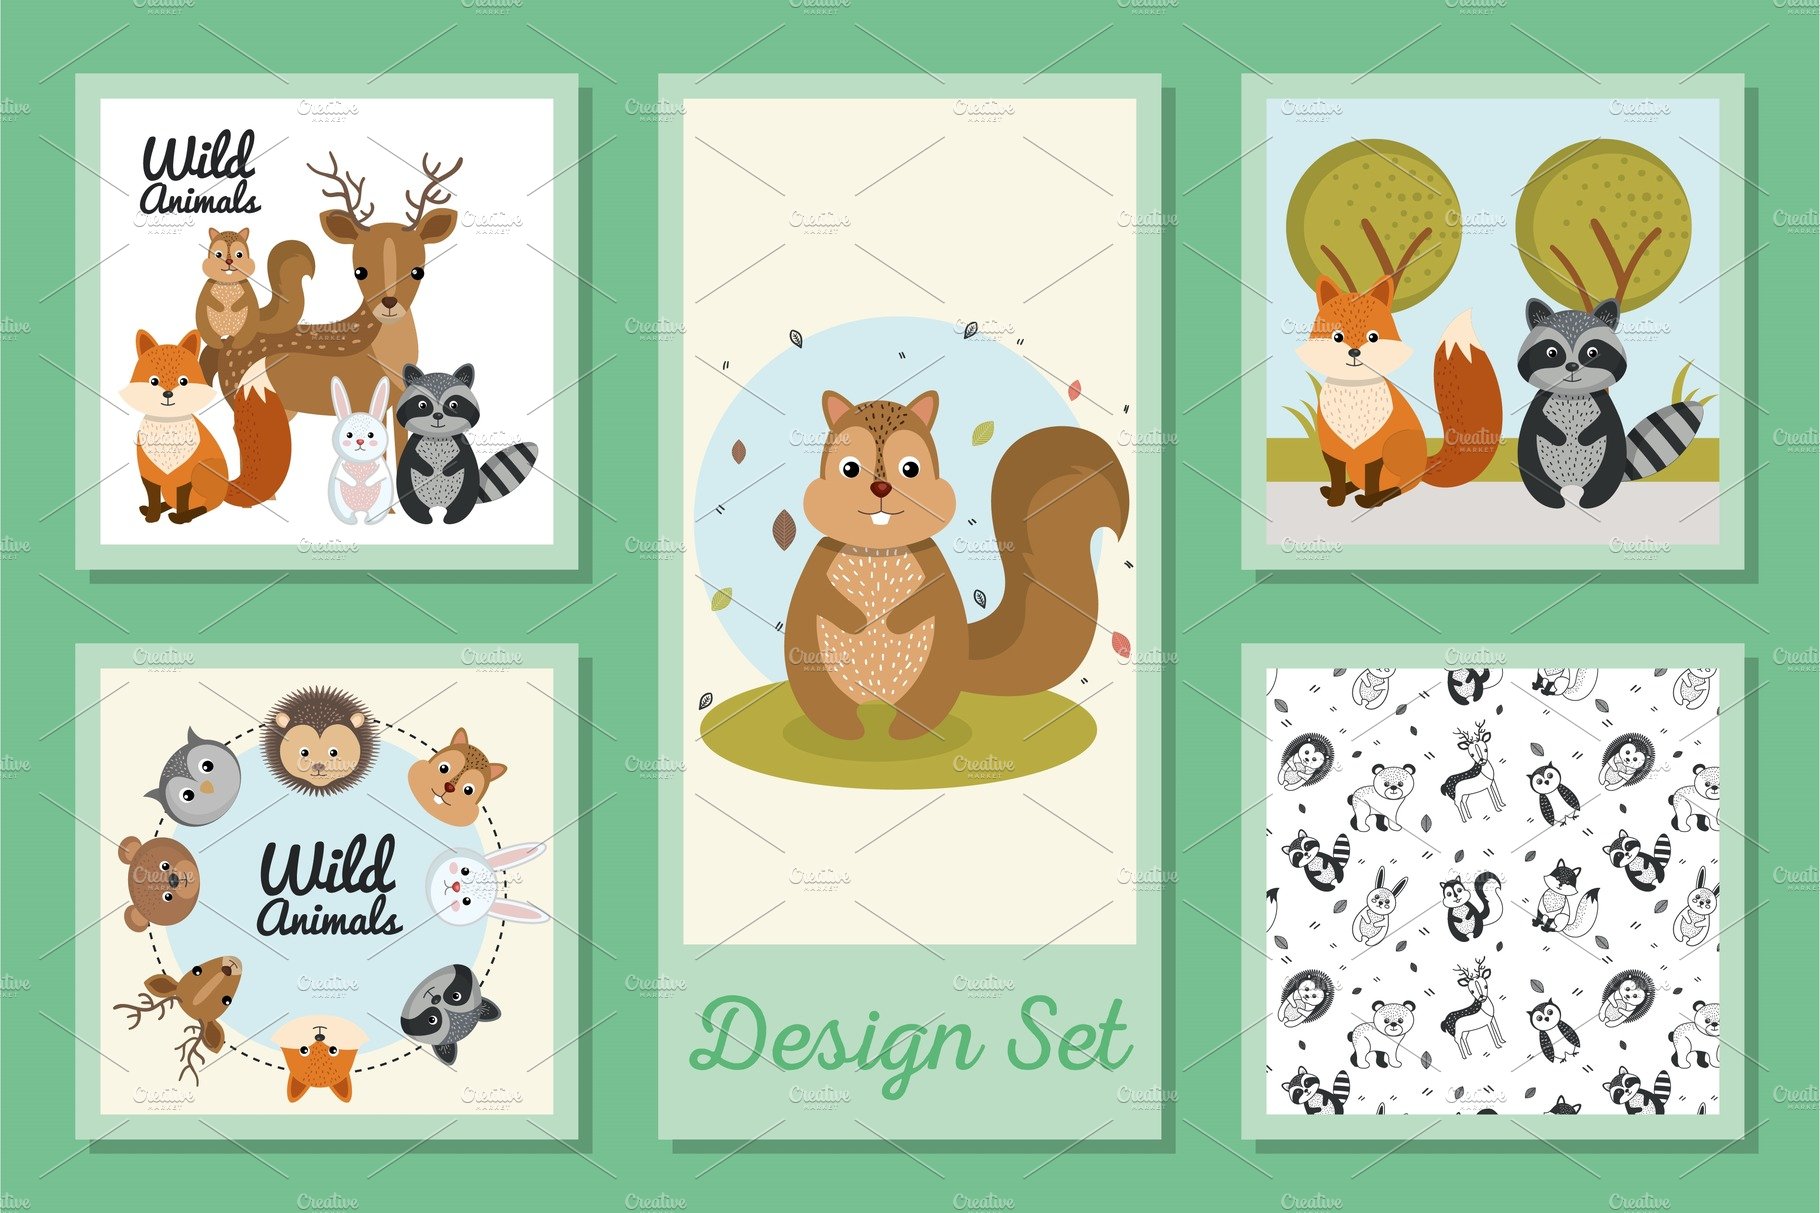 designs set of cute wild animals cover image.